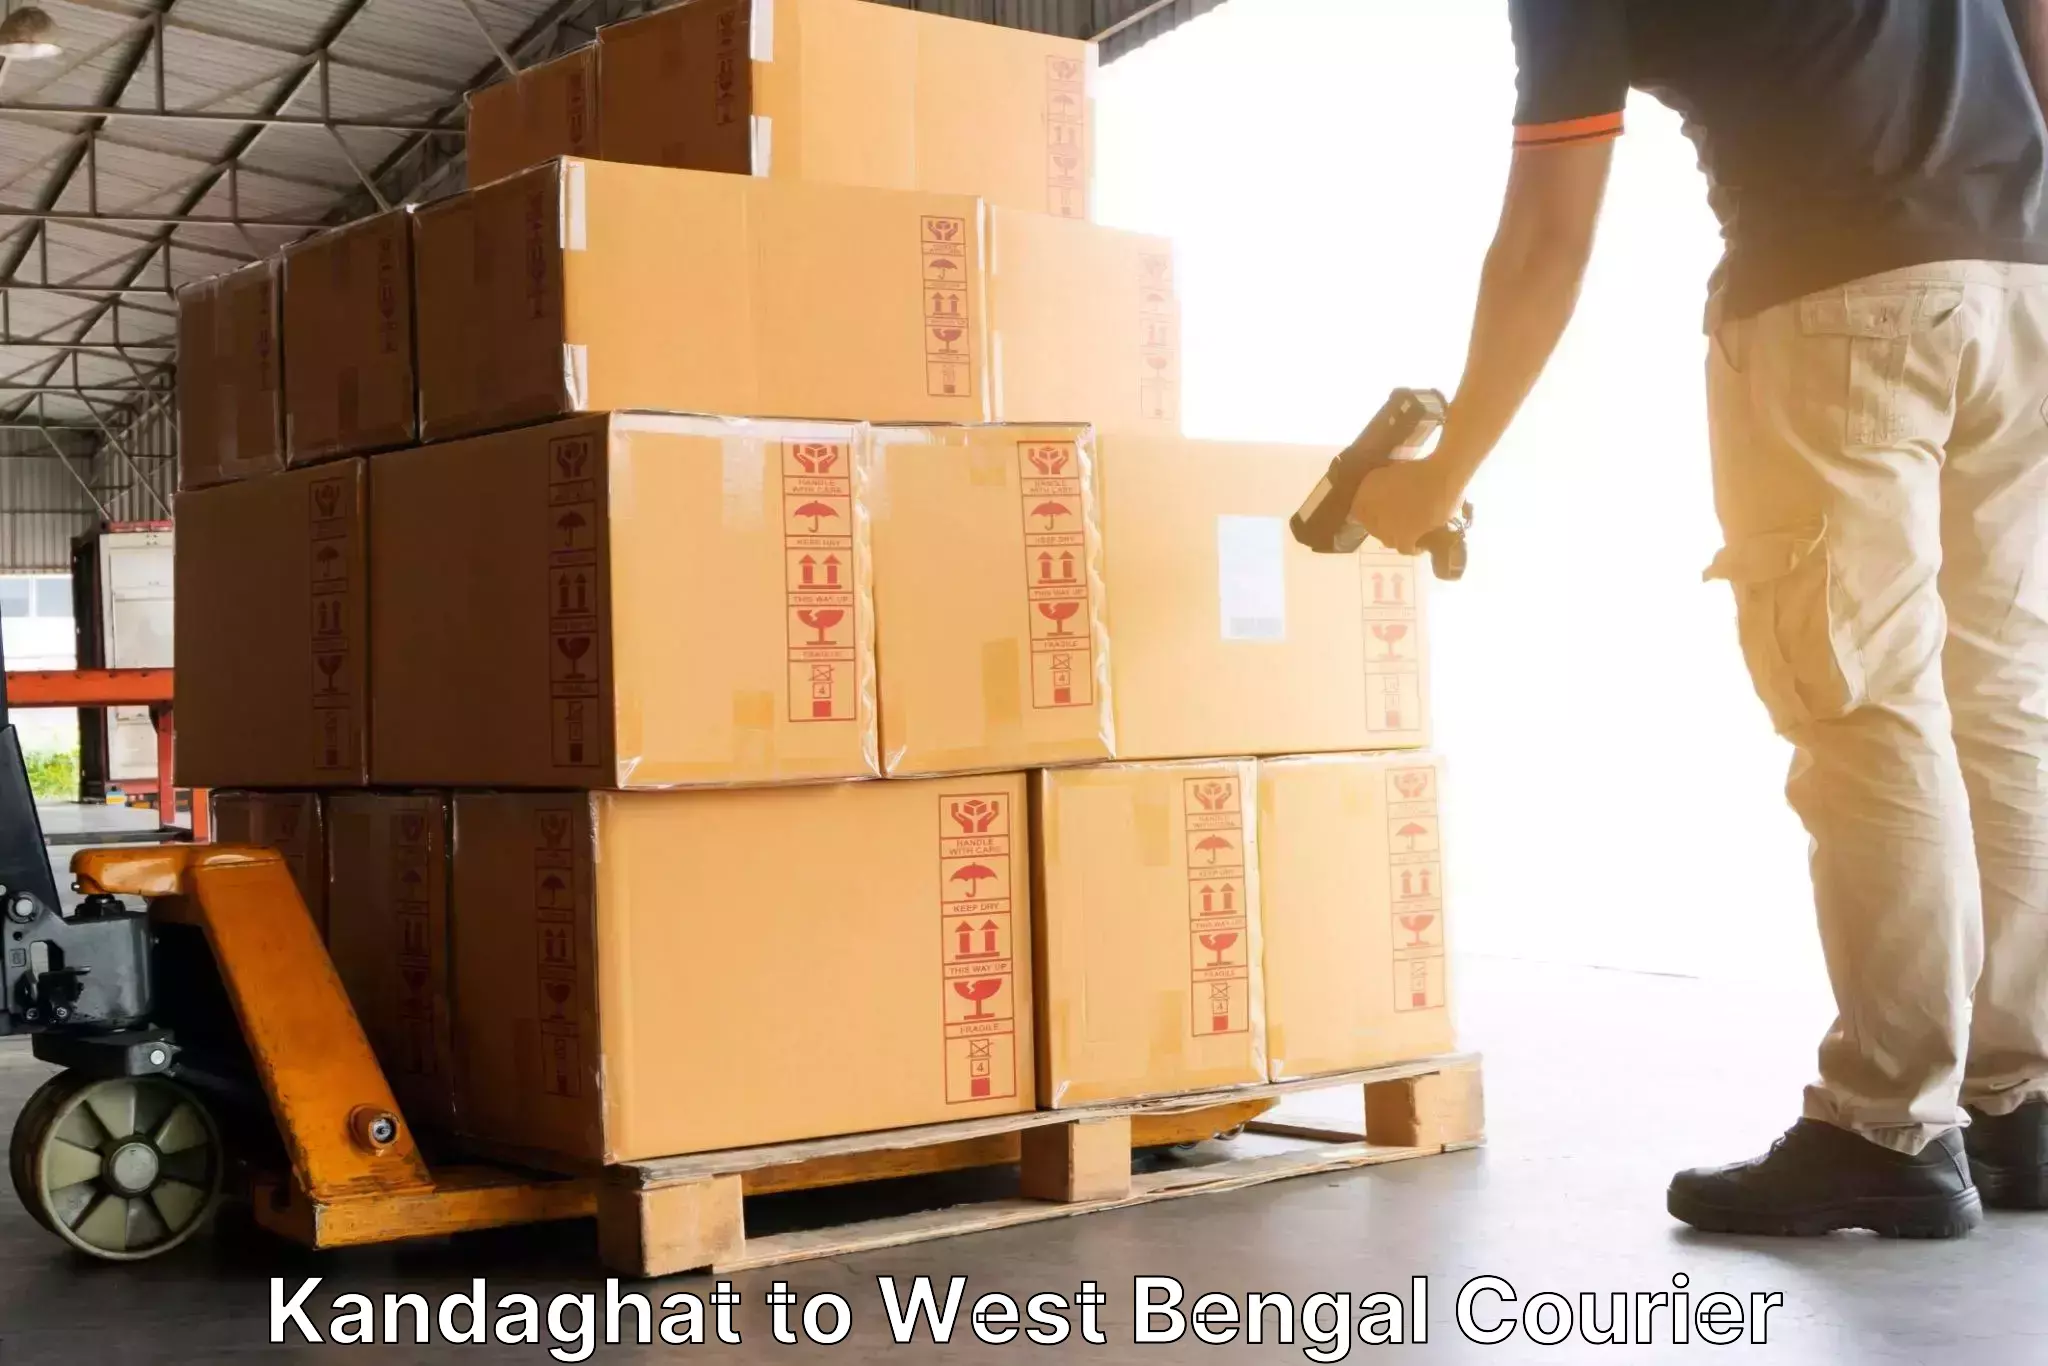 Diverse delivery methods Kandaghat to Shantiniketan